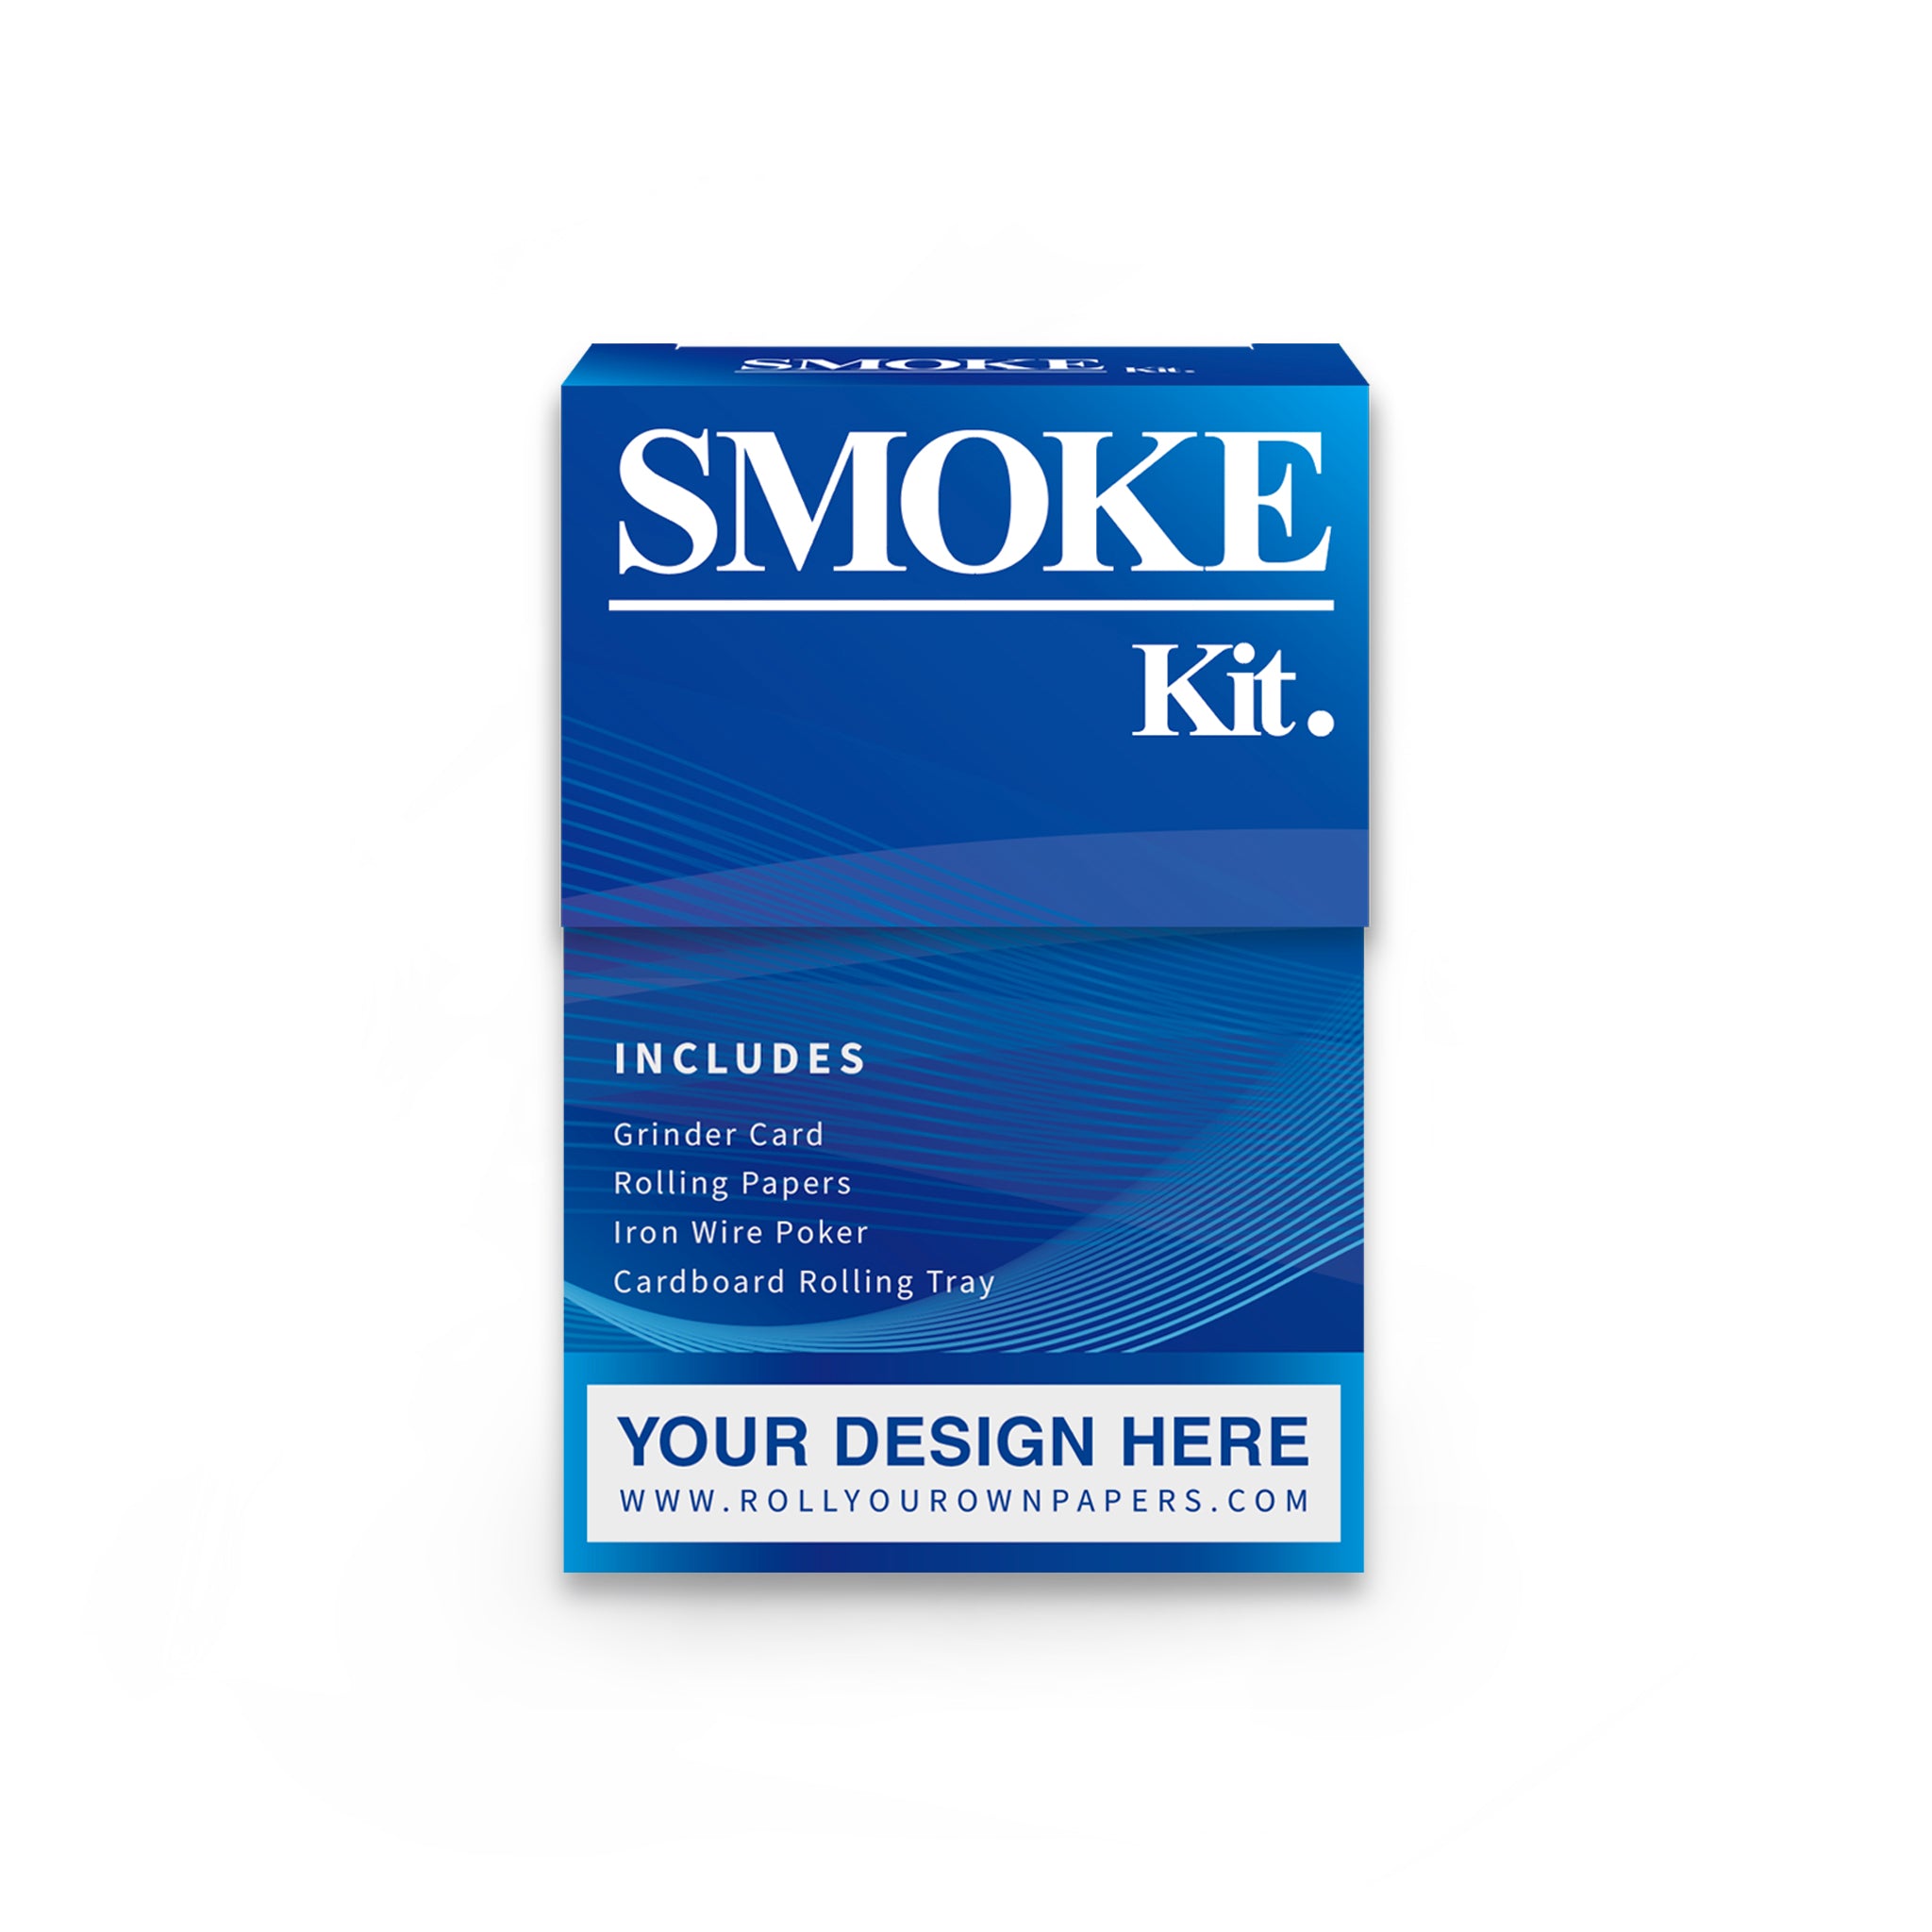 Smoke Kit with Custom Printed Packaging